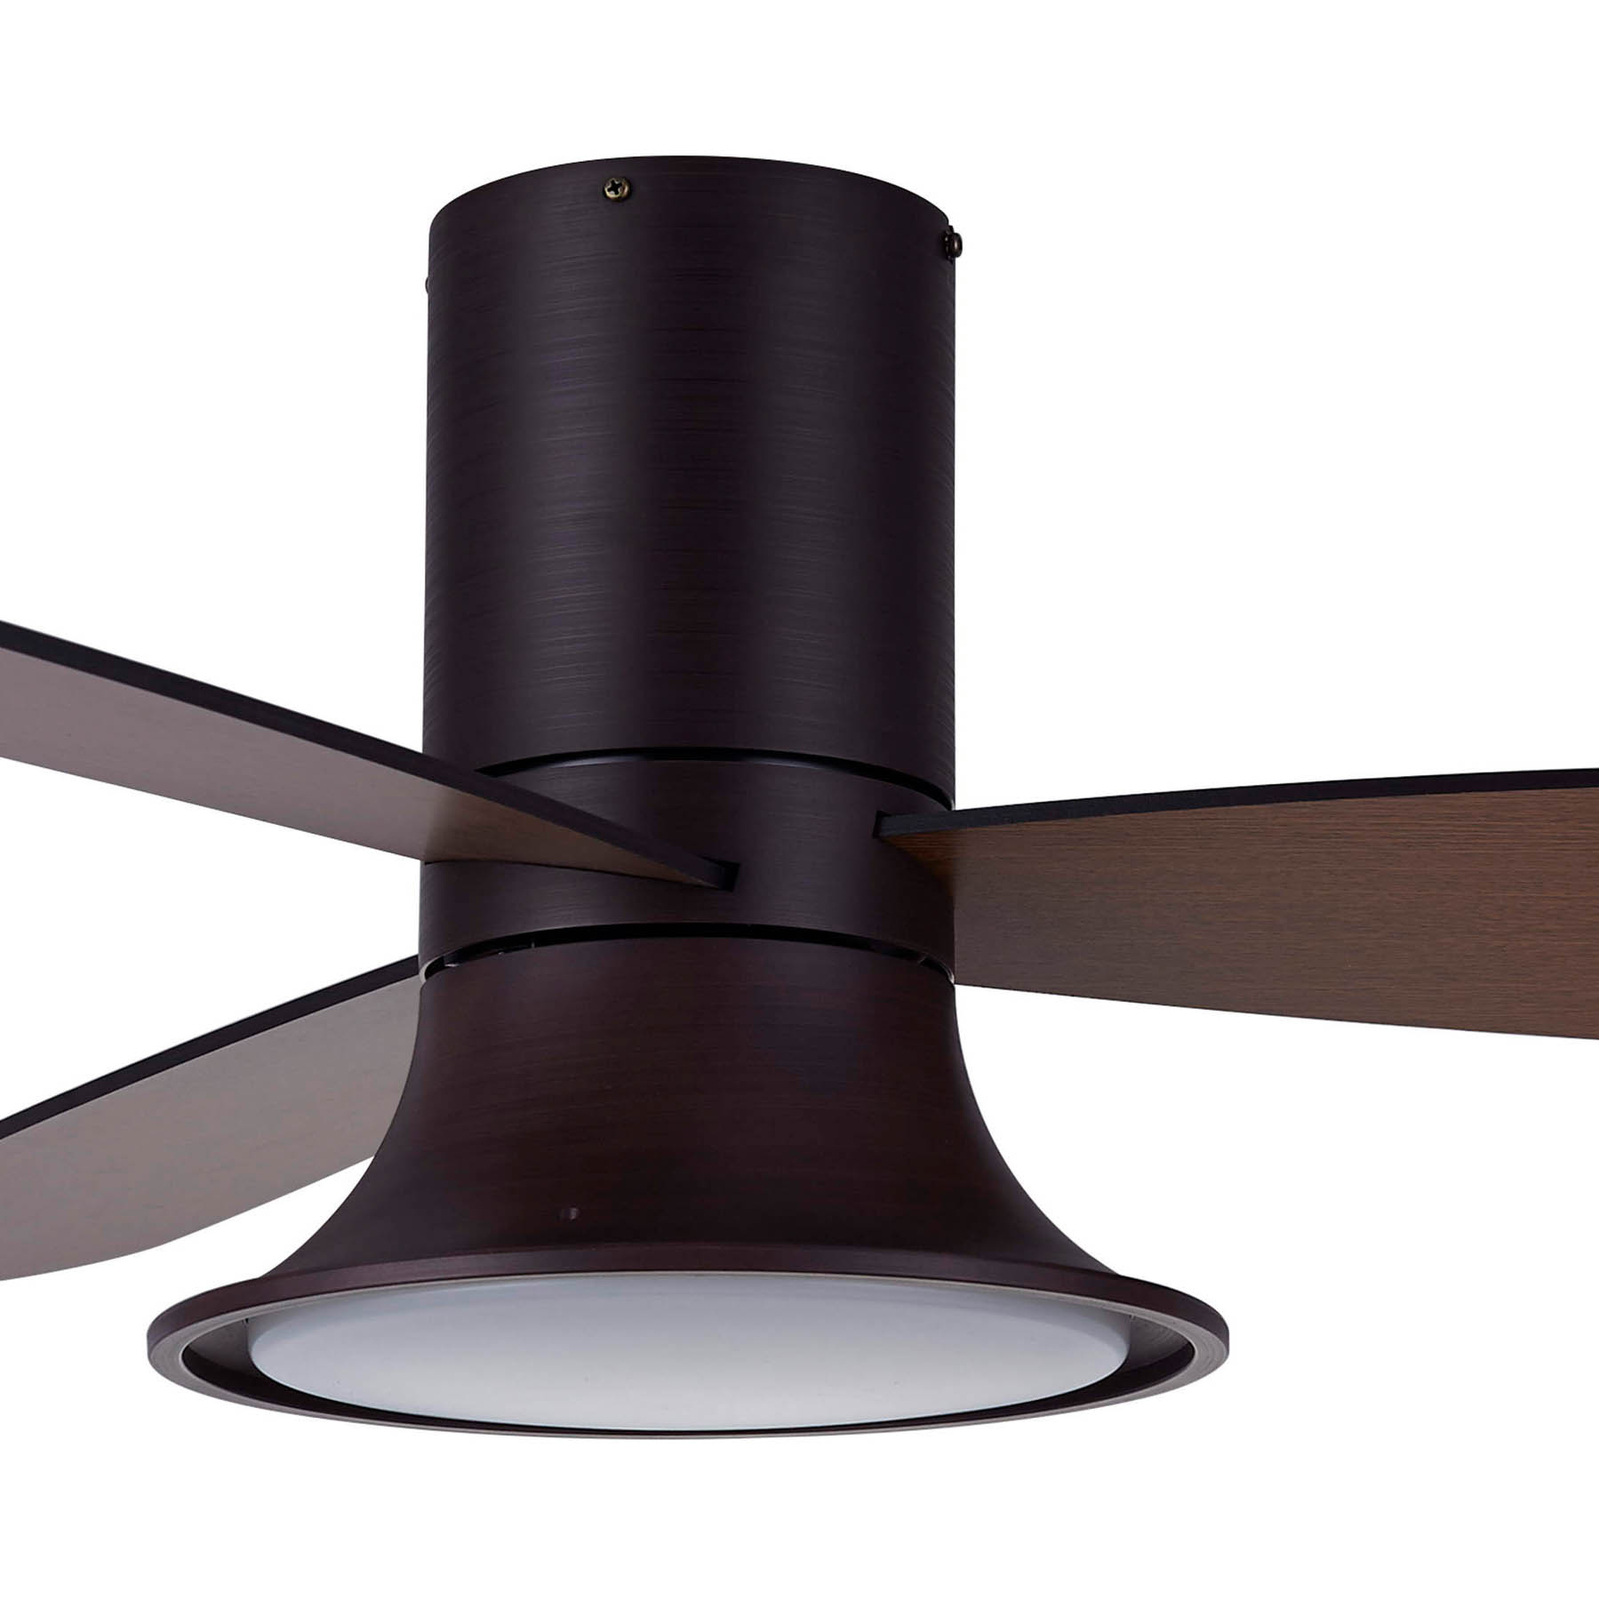 Beacon ceiling fan with light Flusso bronze-coloured quiet